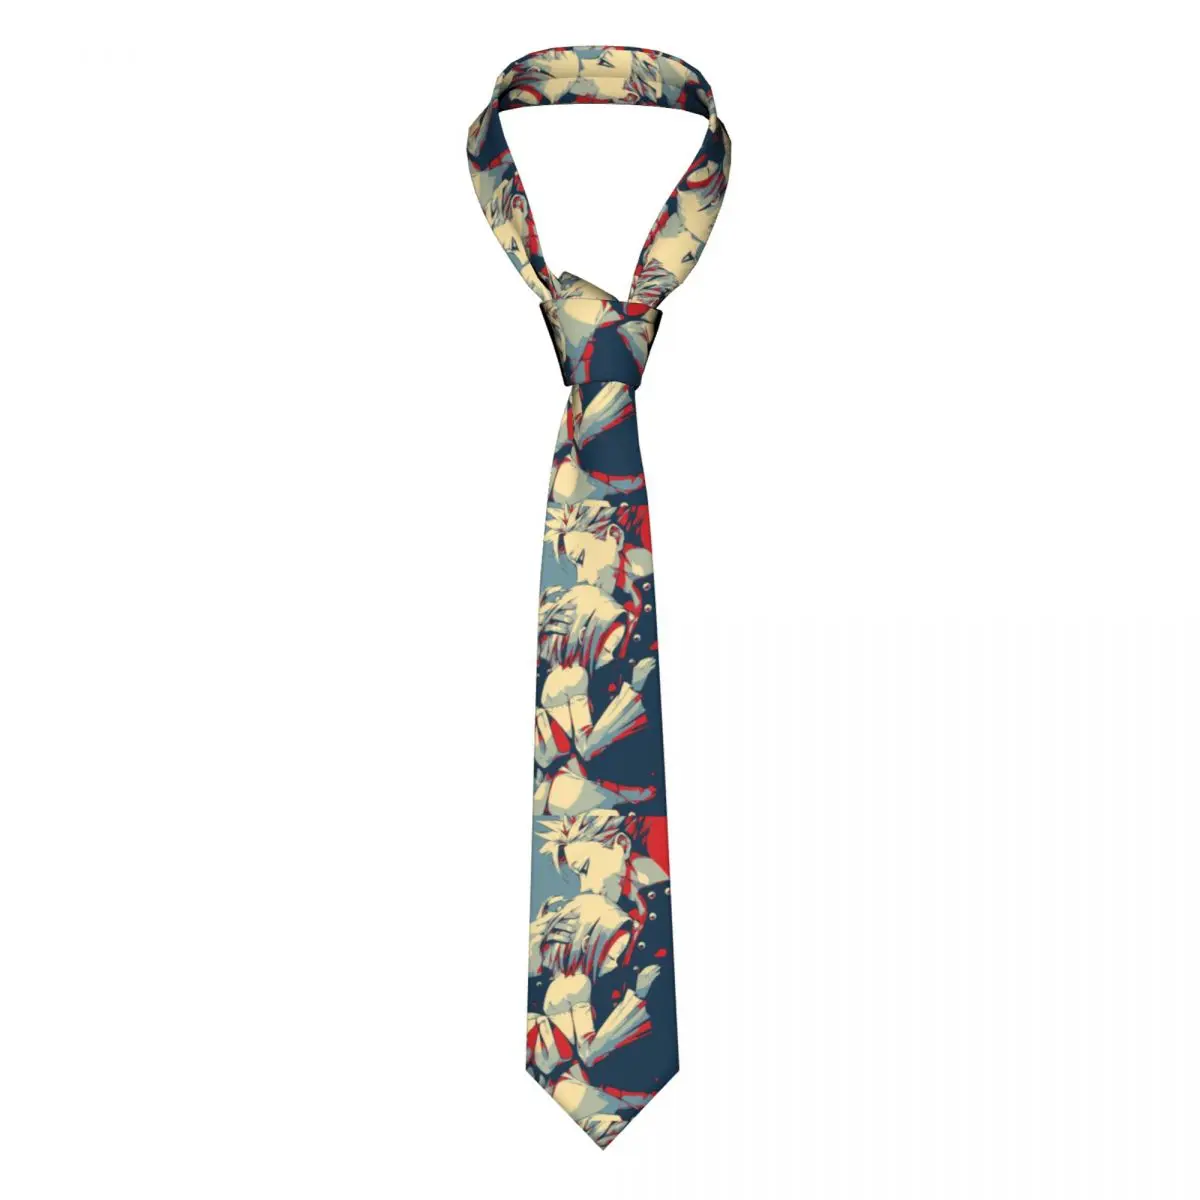 

The Seven Deadly Sins Men Neckties Fashion Polyester 8 cm Wide Ban and Elaine Neck Tie for Men Shirt Accessories Gravatas Gift